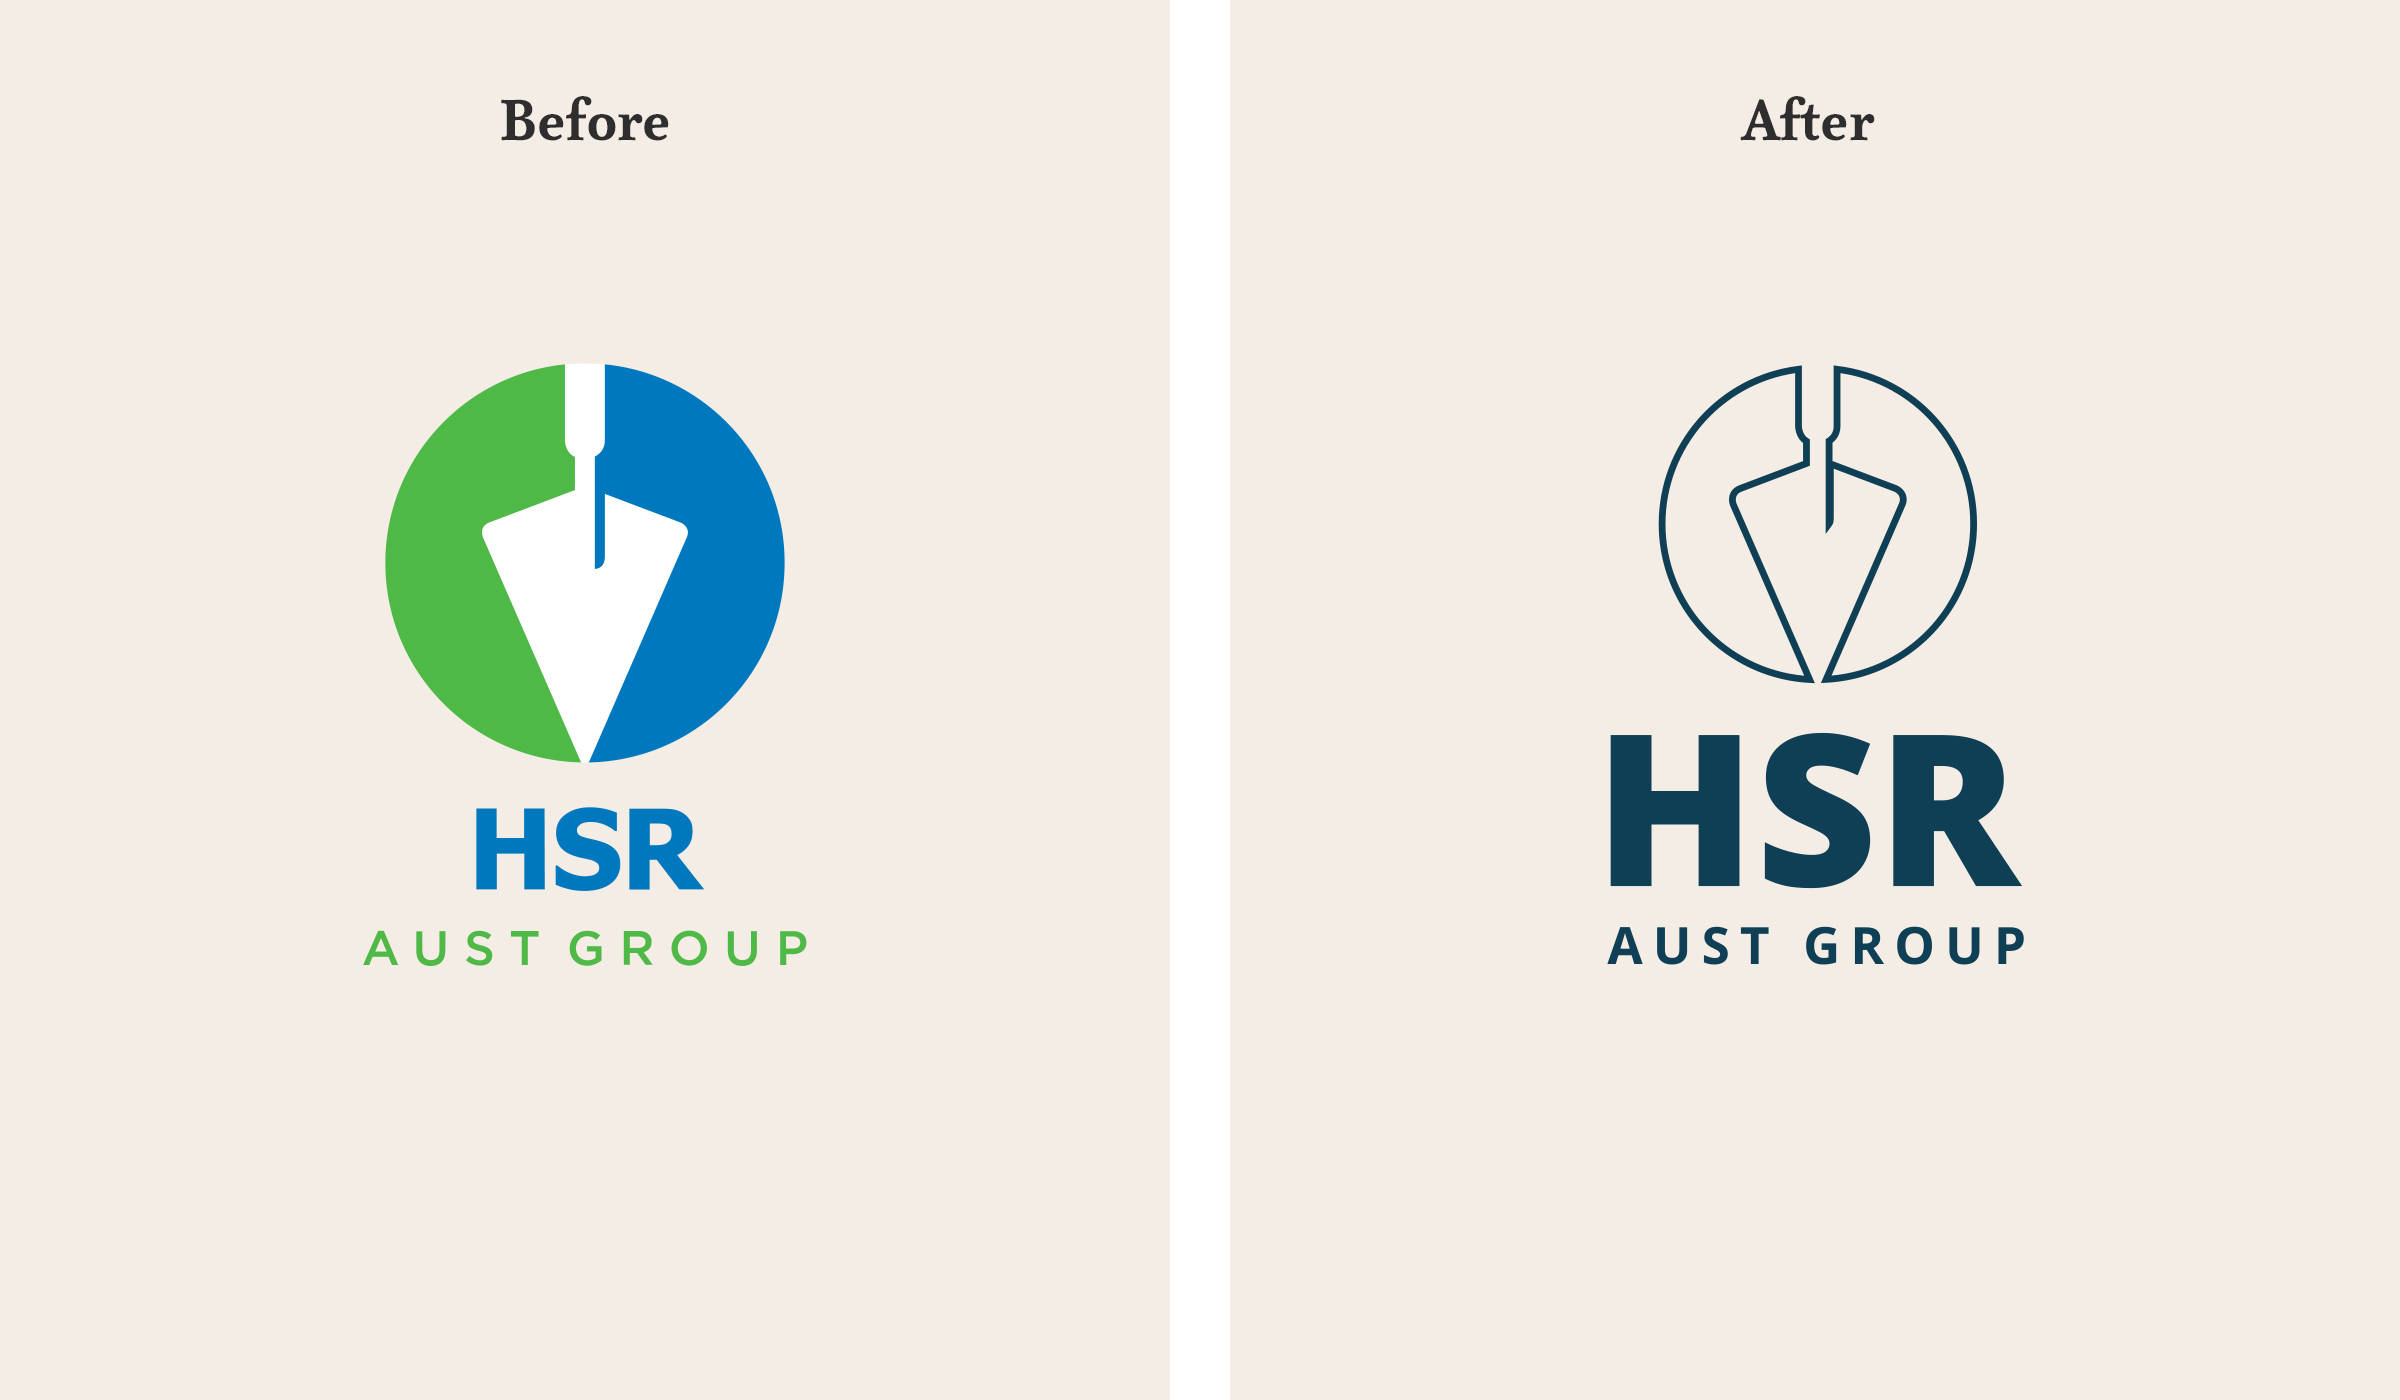 HSR logo comparisons